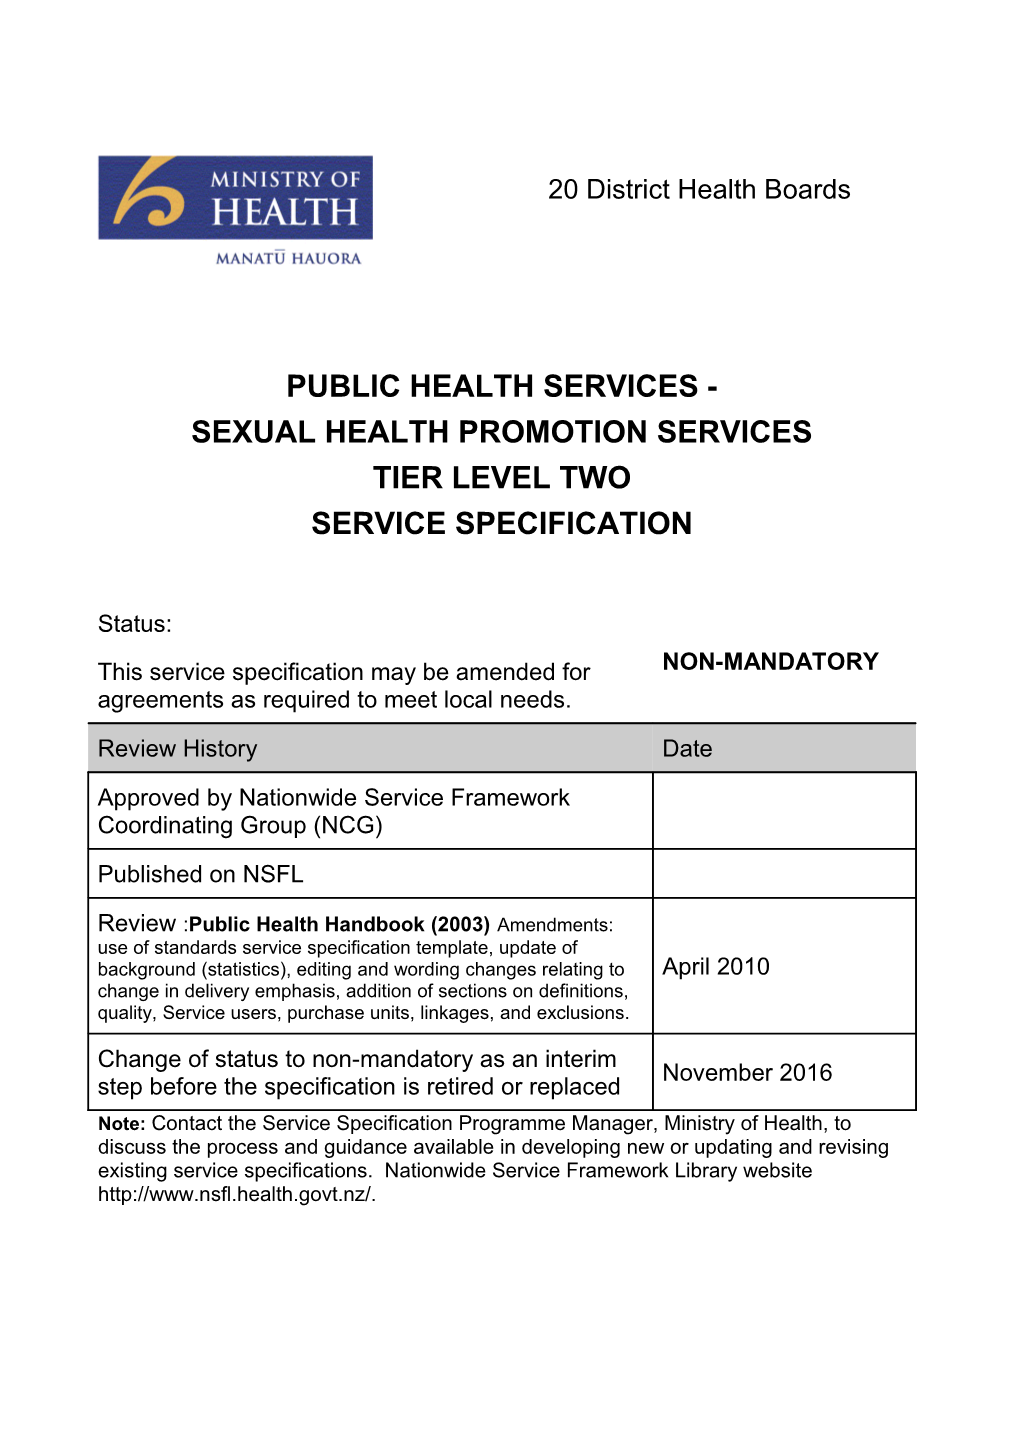 Format for Public Health Services Handbook